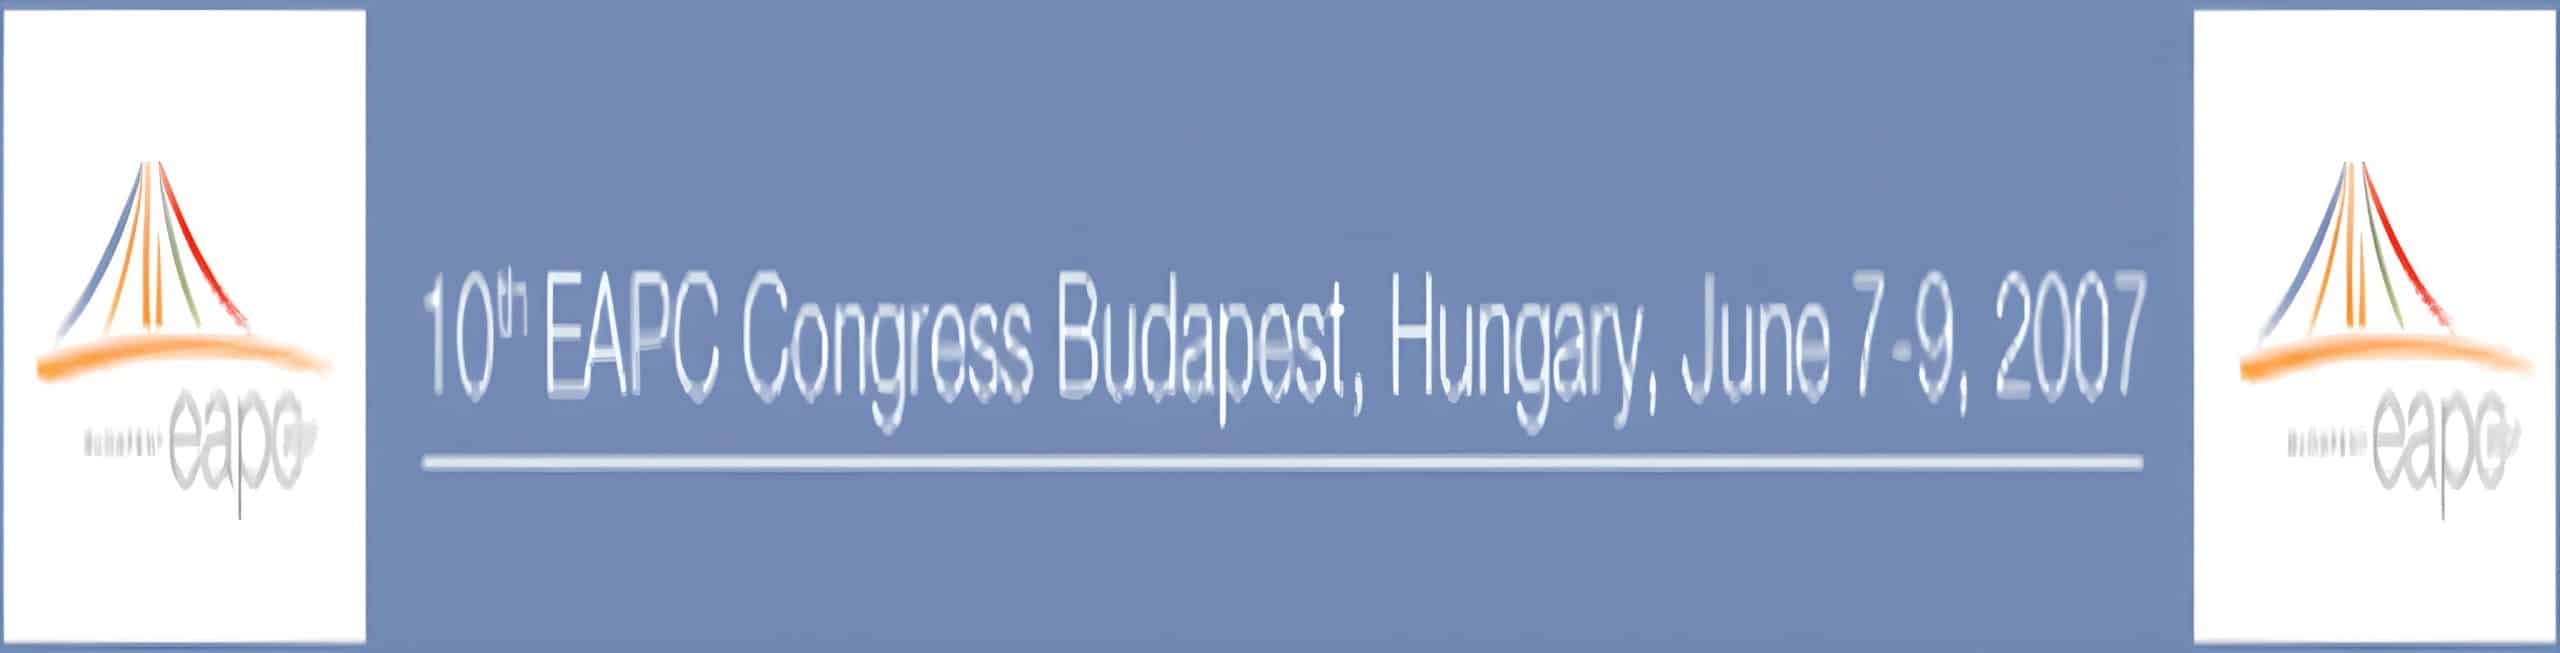 10th EAPC congress budapest, hungary, june 7-9, 2007